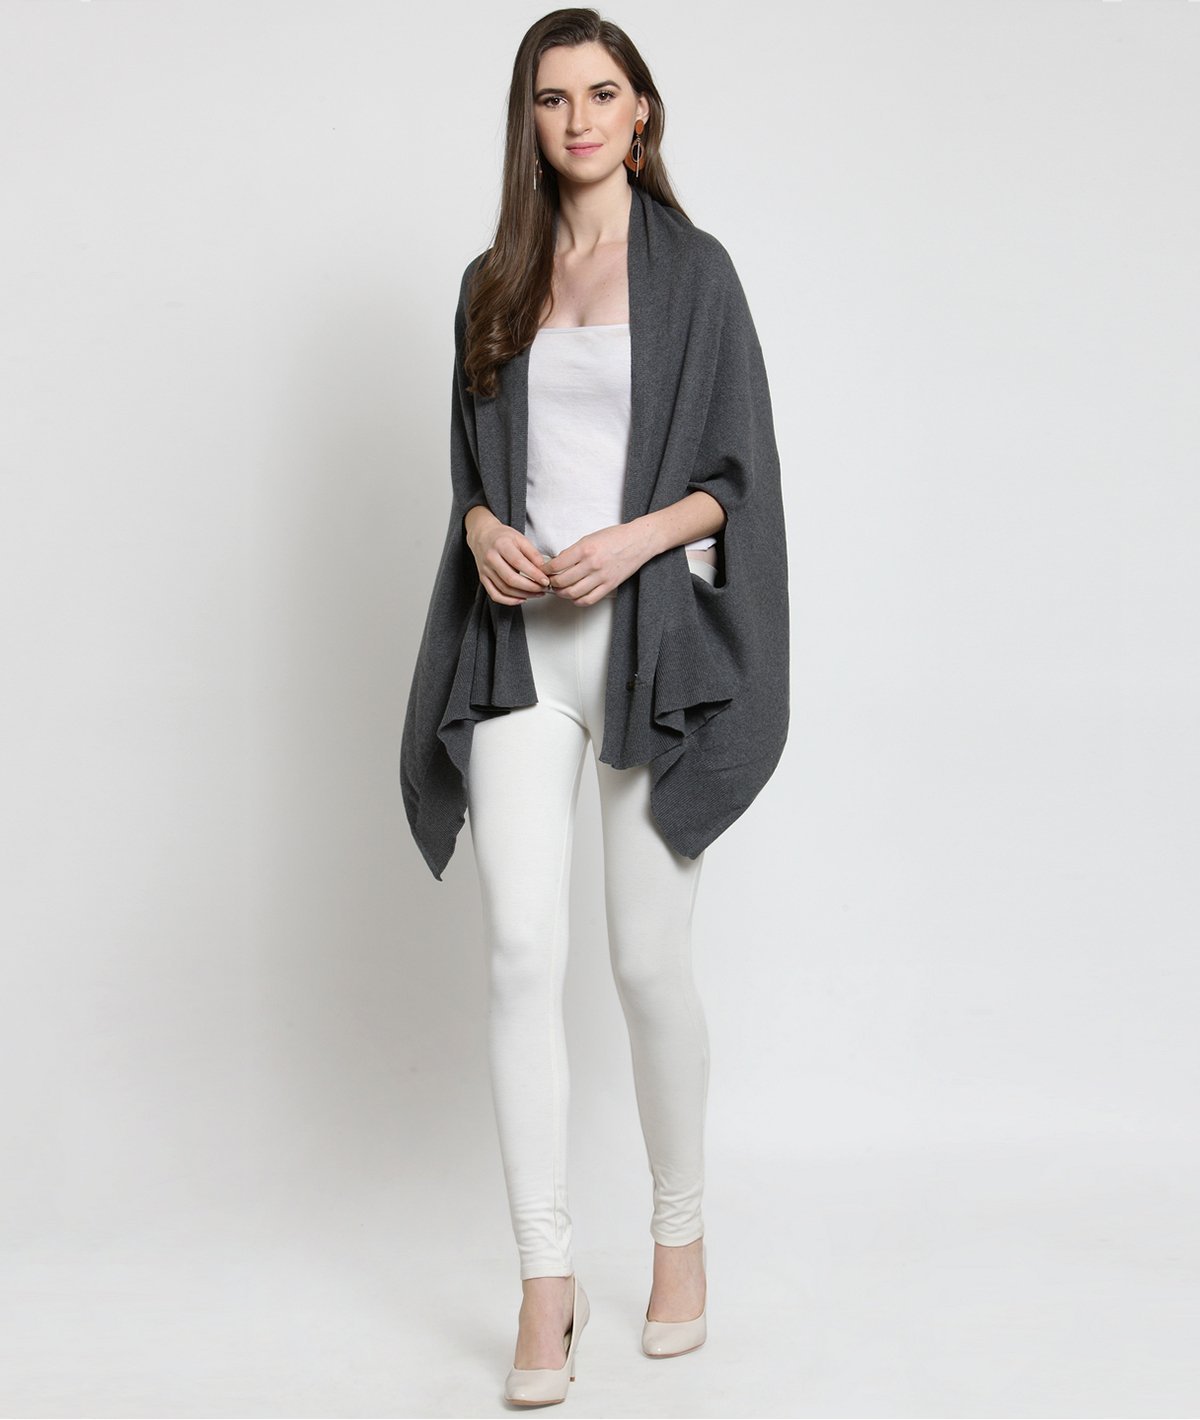 Palma - Dark Grey Cotton Knitted Fashion Poncho / Top / Cape